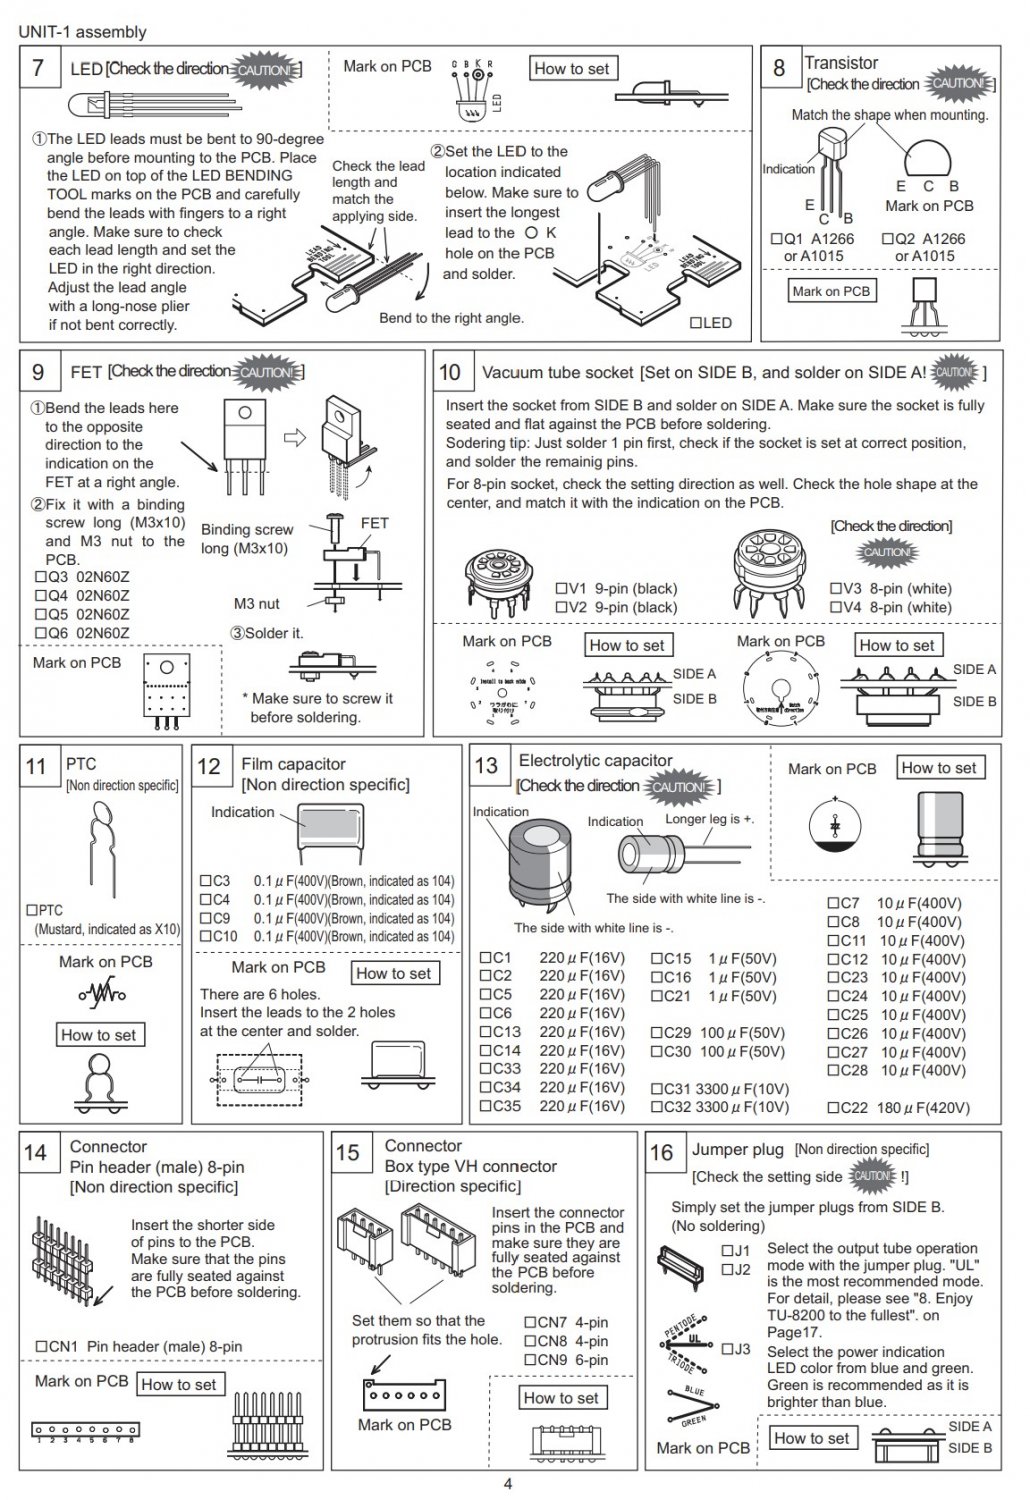 TU-8200R instructions sample.jpg